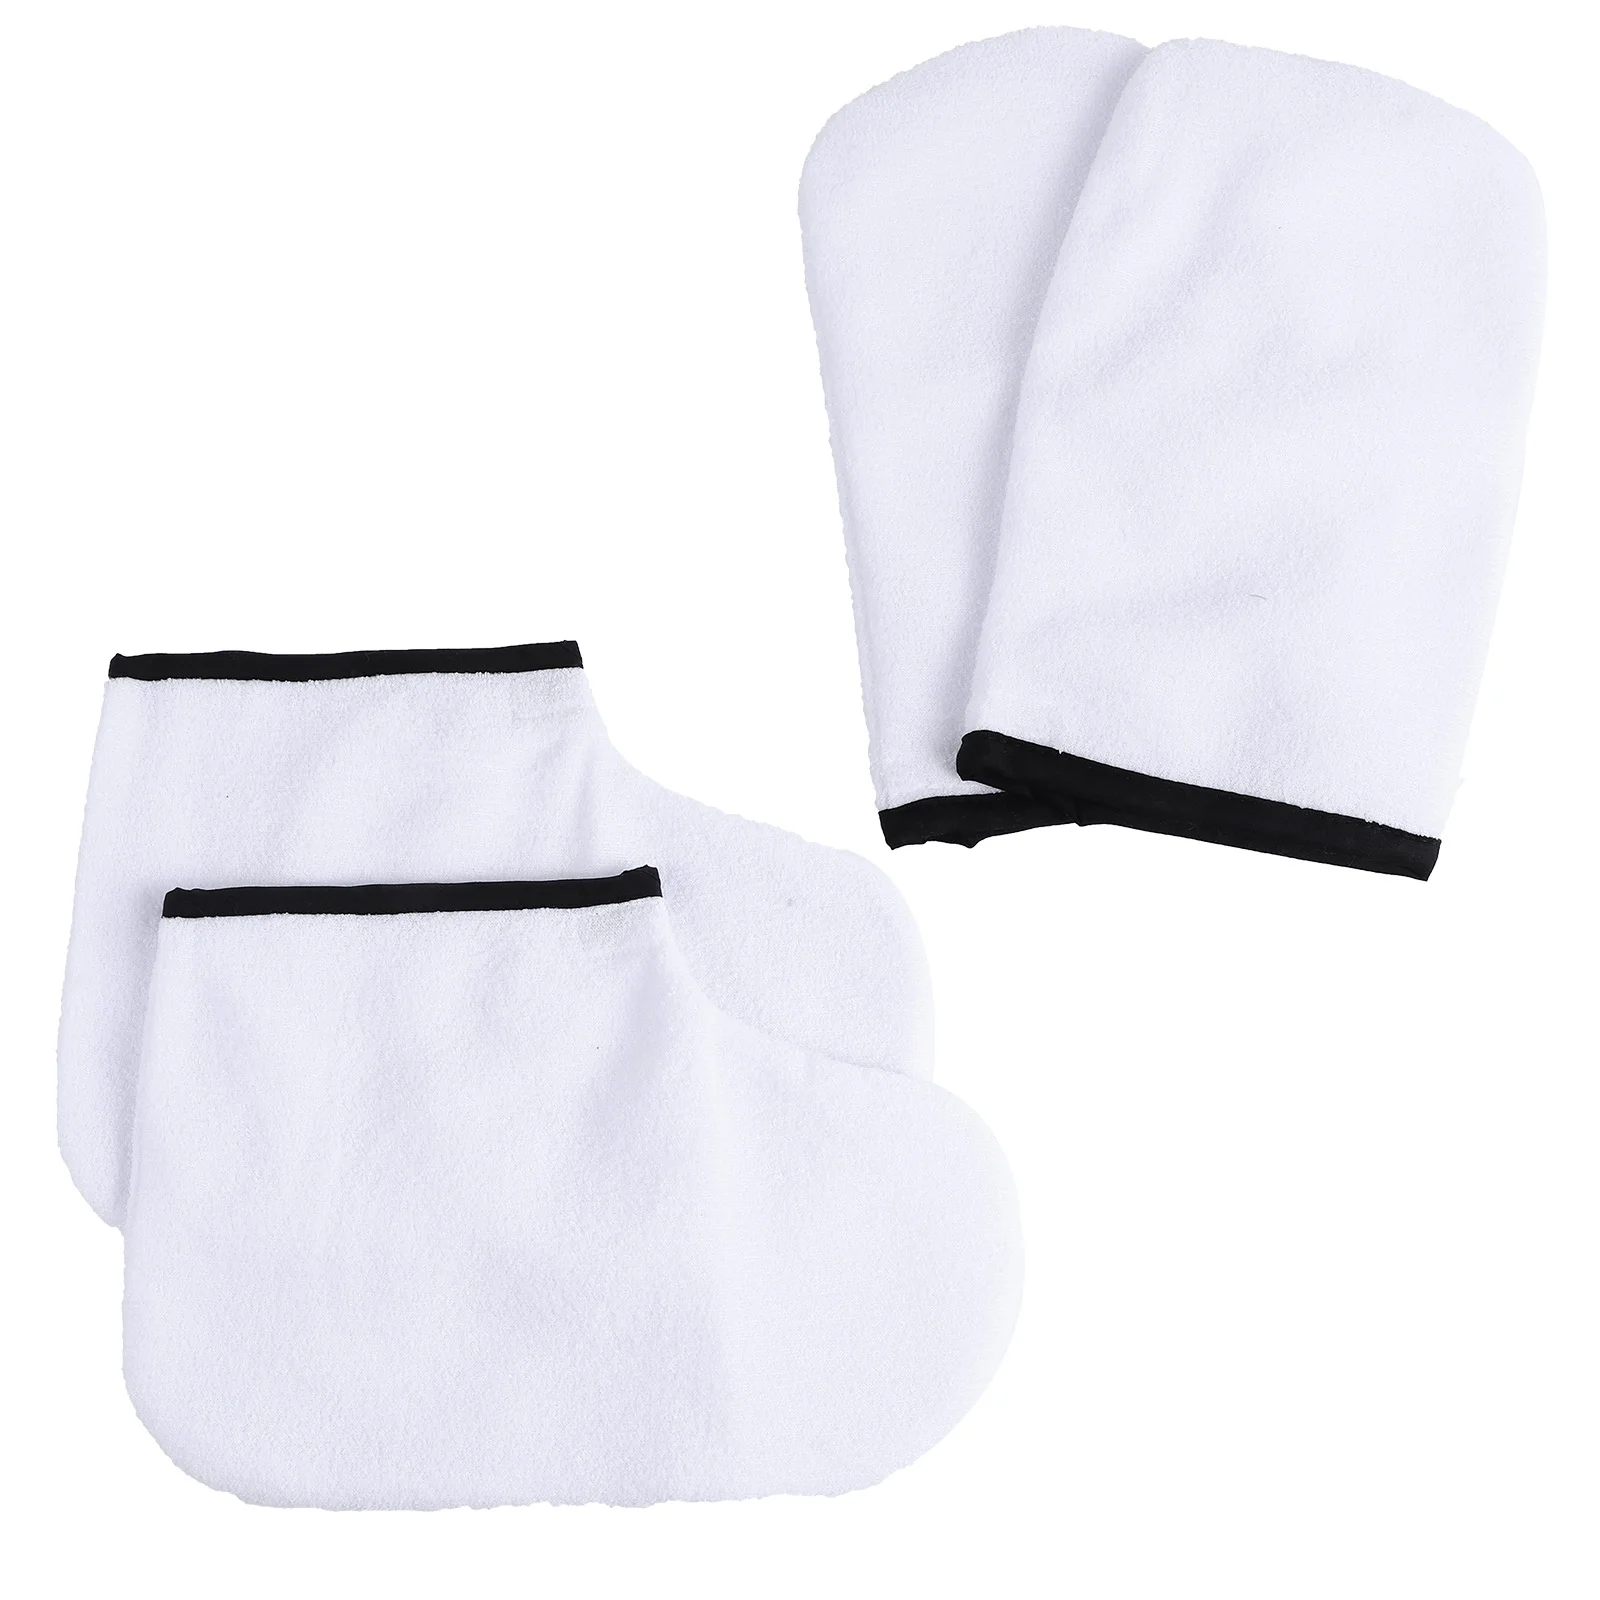 

Paraffin Wax Gloves Foot Booties Cover Liners Bath Hand Warmer Socks Sock Hands Mittens Heated Spa Hot Baths Mitt Mitts